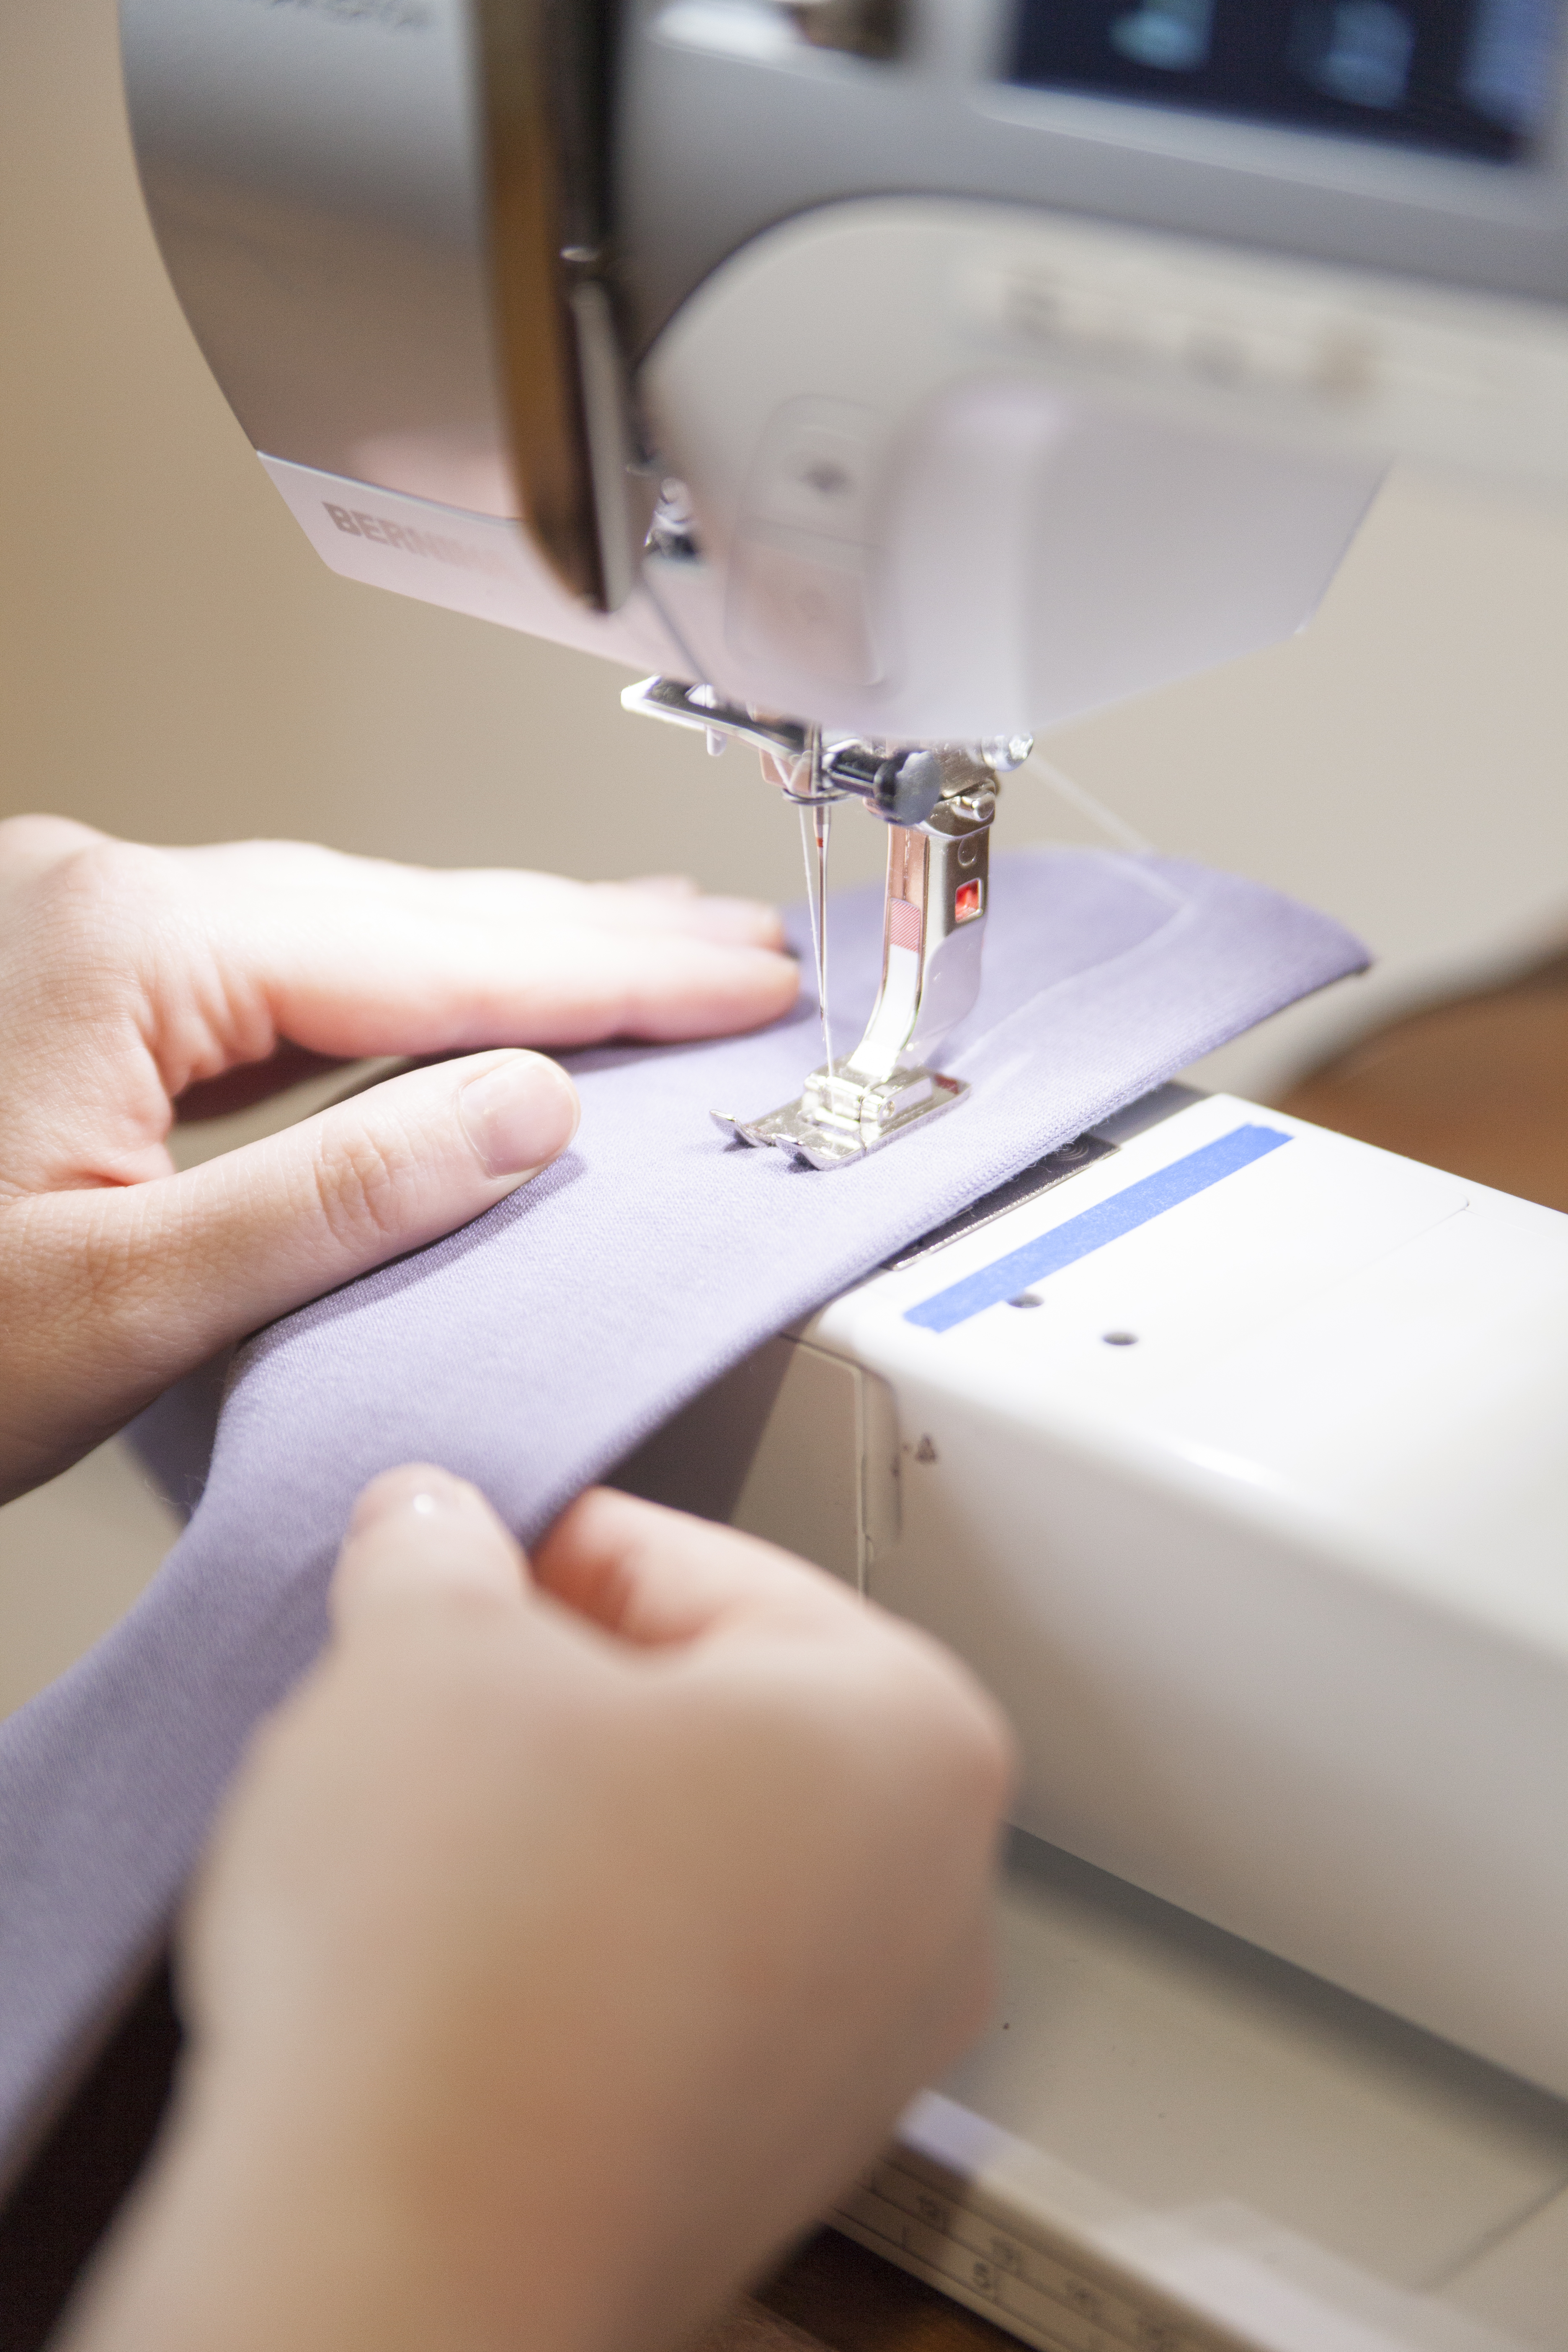 sewing with knits on a BERNINA sewing machine